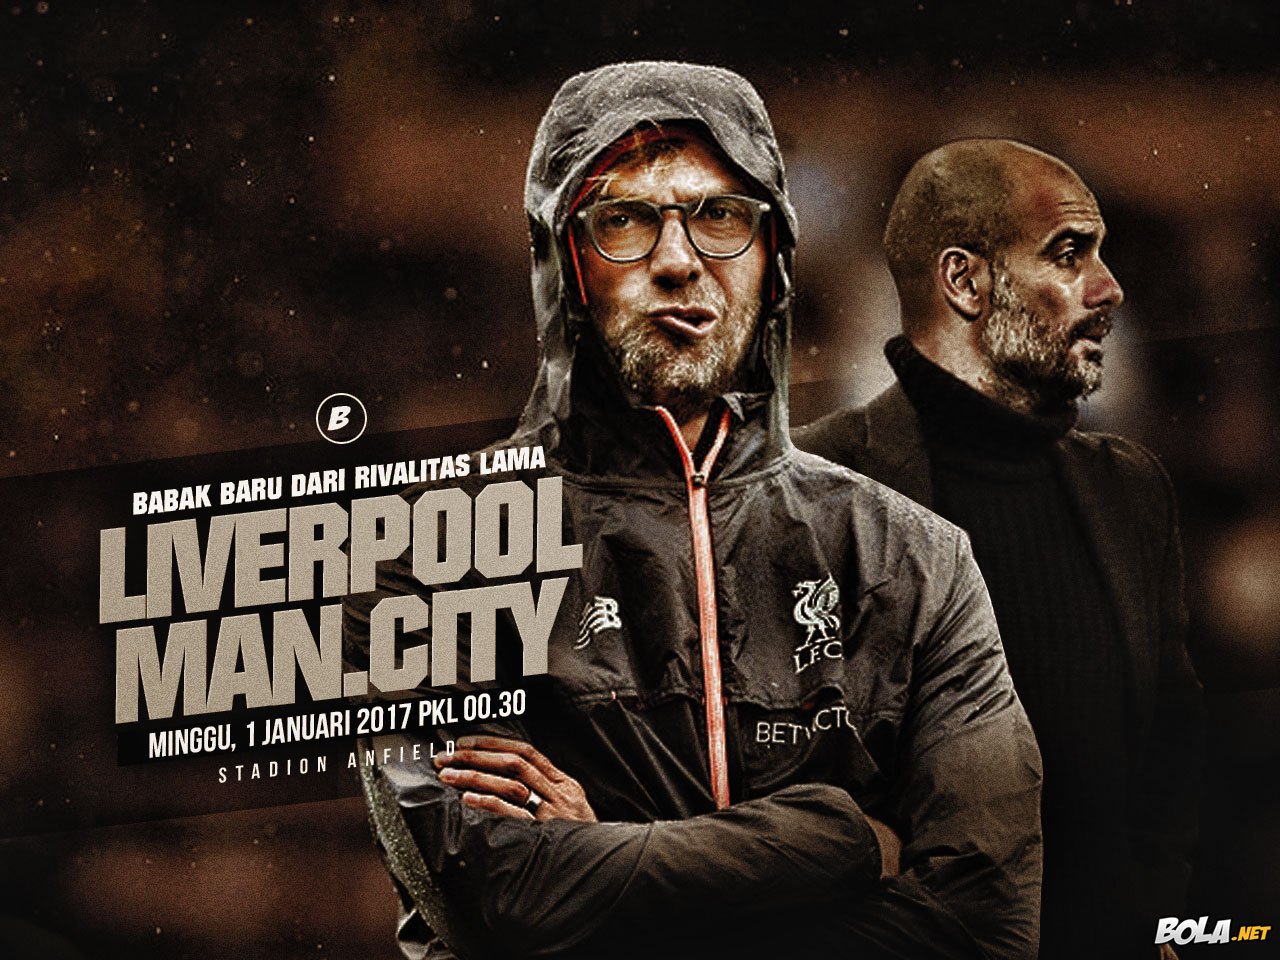 Deskripsi : Wallpaper Liverpool Vs Manchester City, size: 1280x960